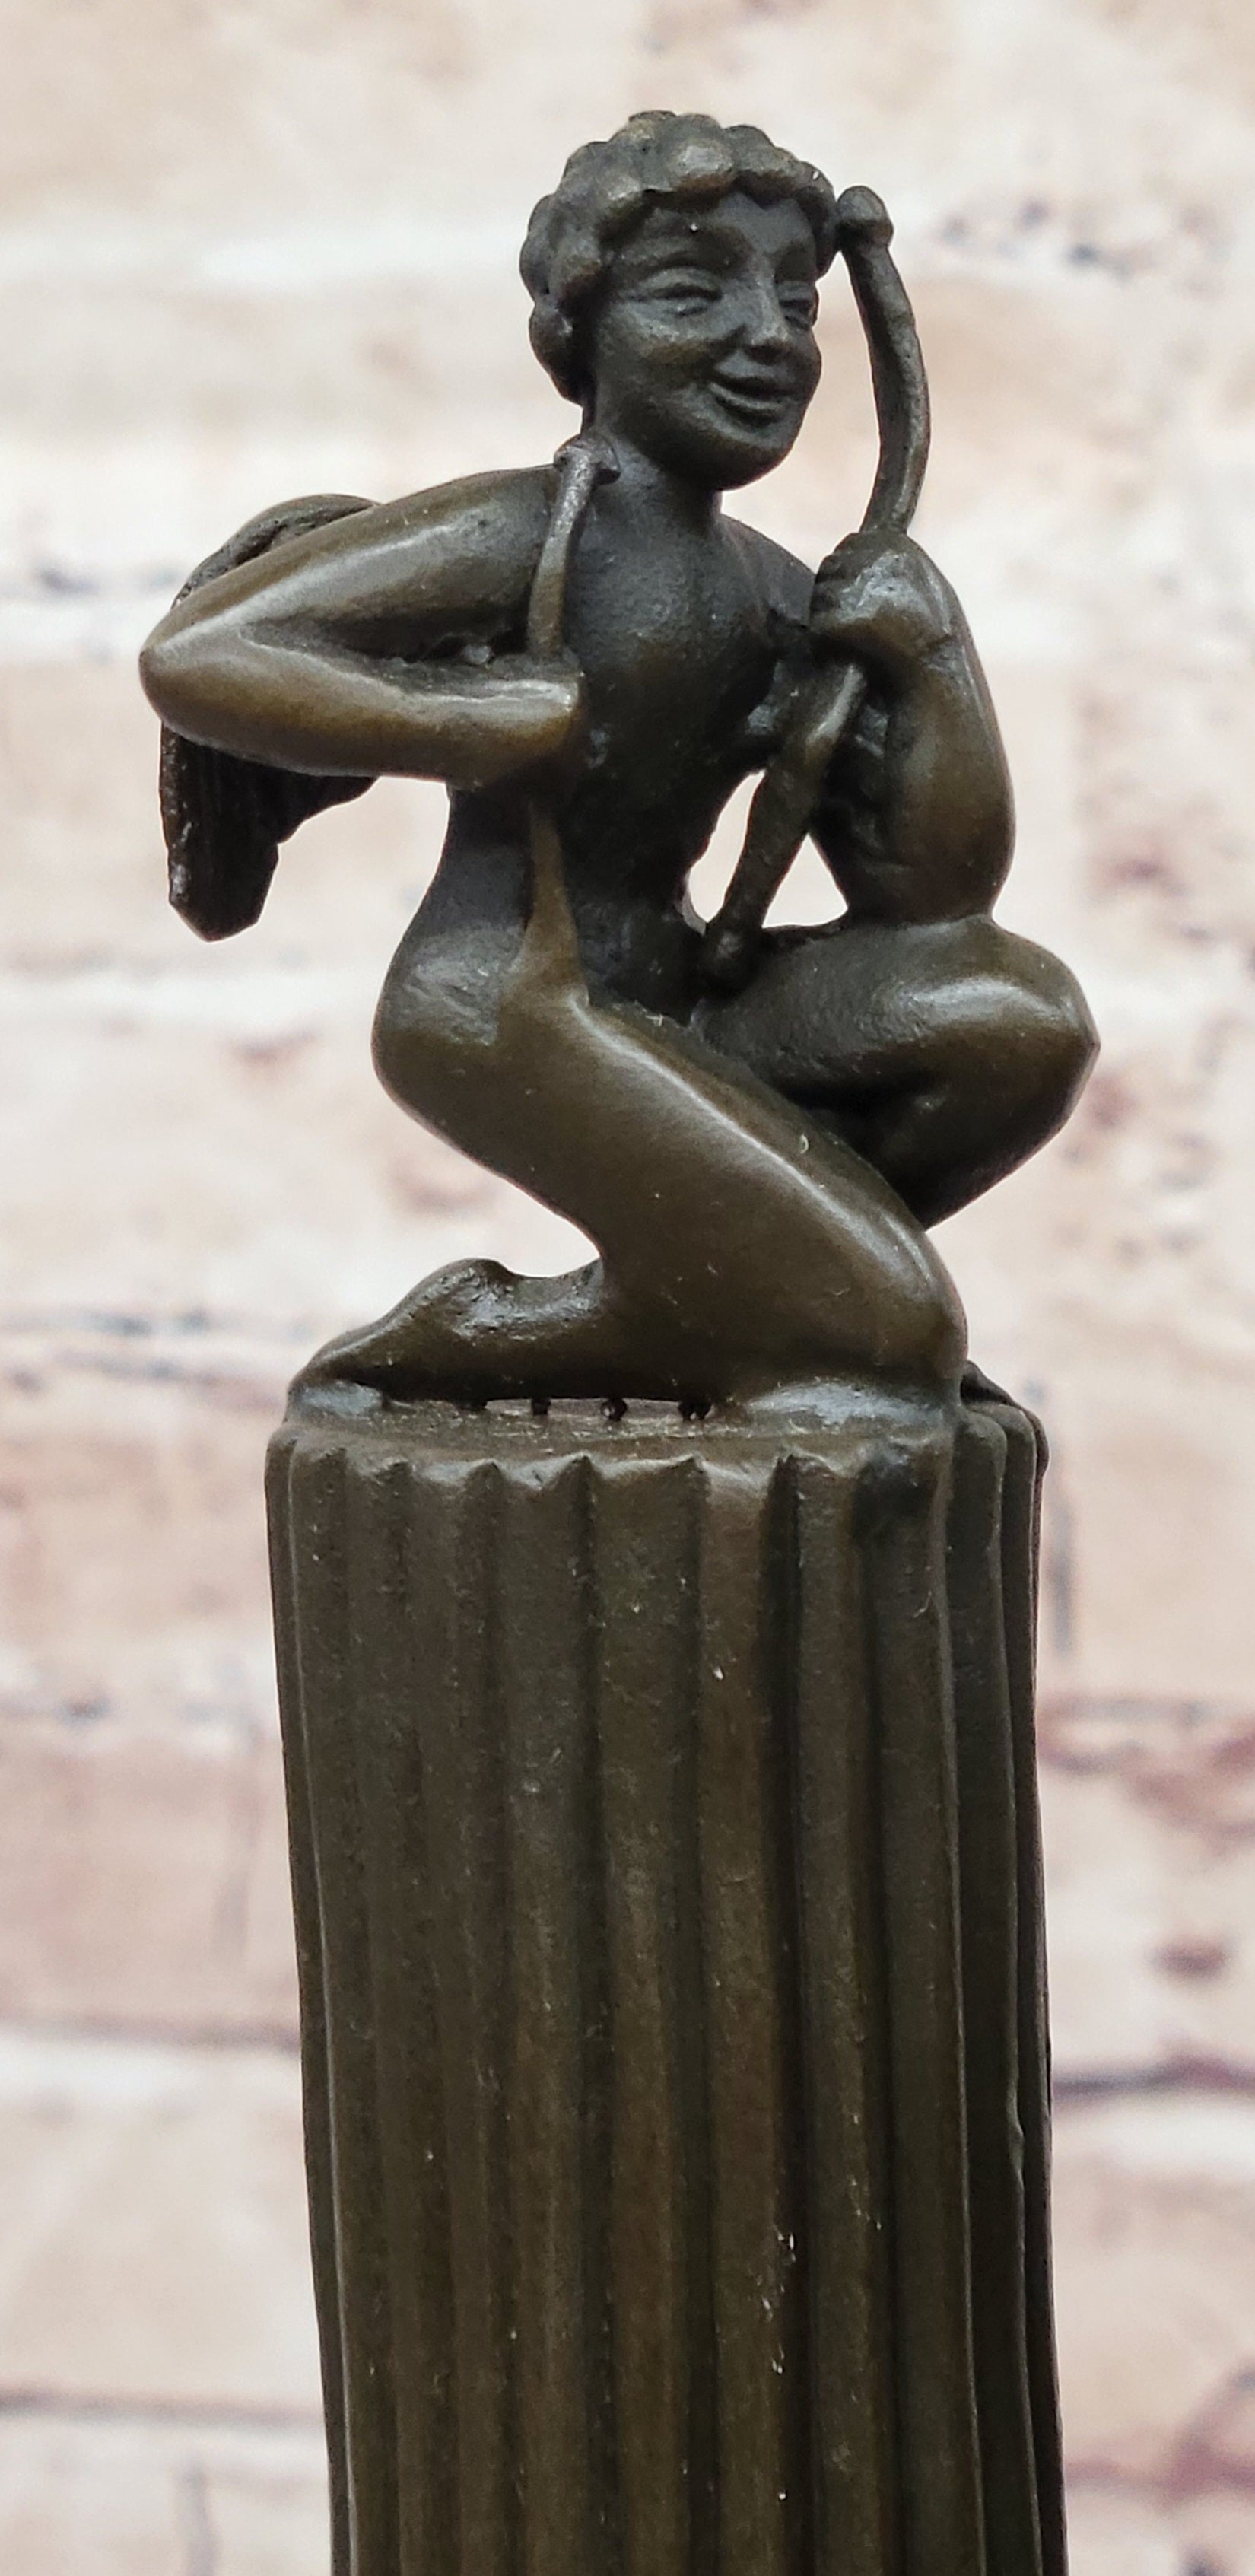 Bronze figurine Erotica Female Nude sculpture Girl Bondage bdsm vagina sm gift